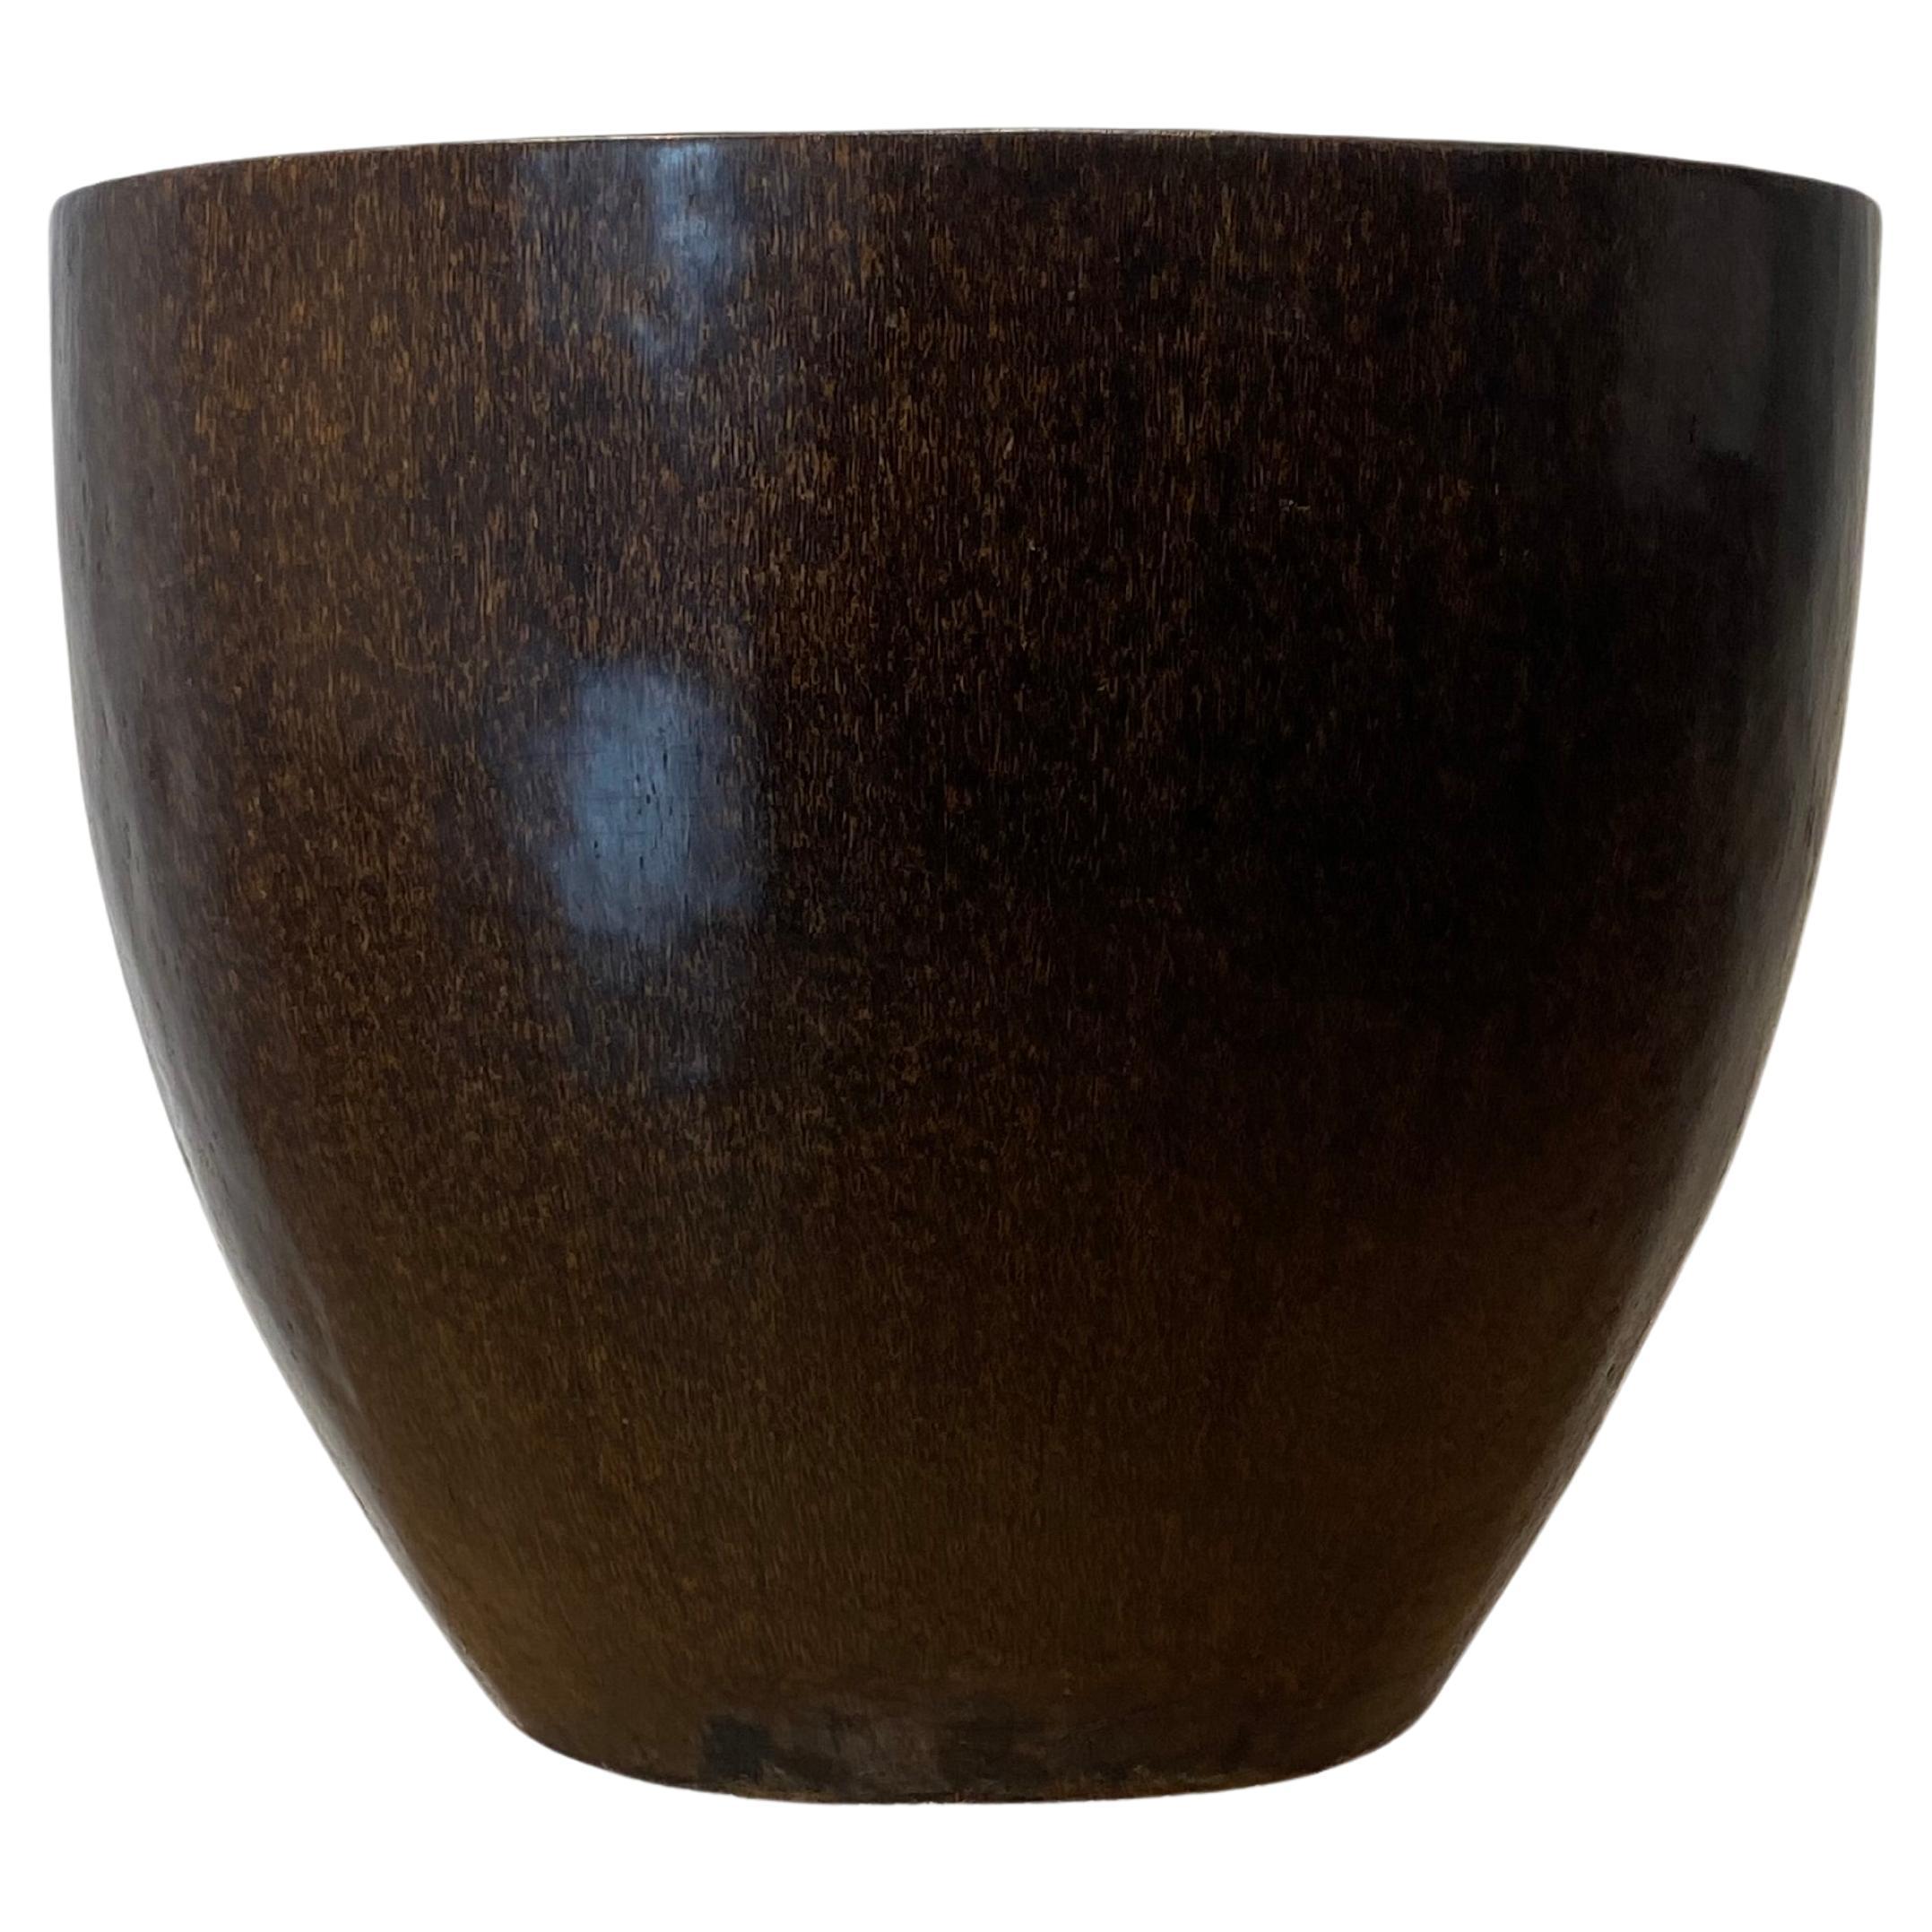 Palmwood Vases and Vessels